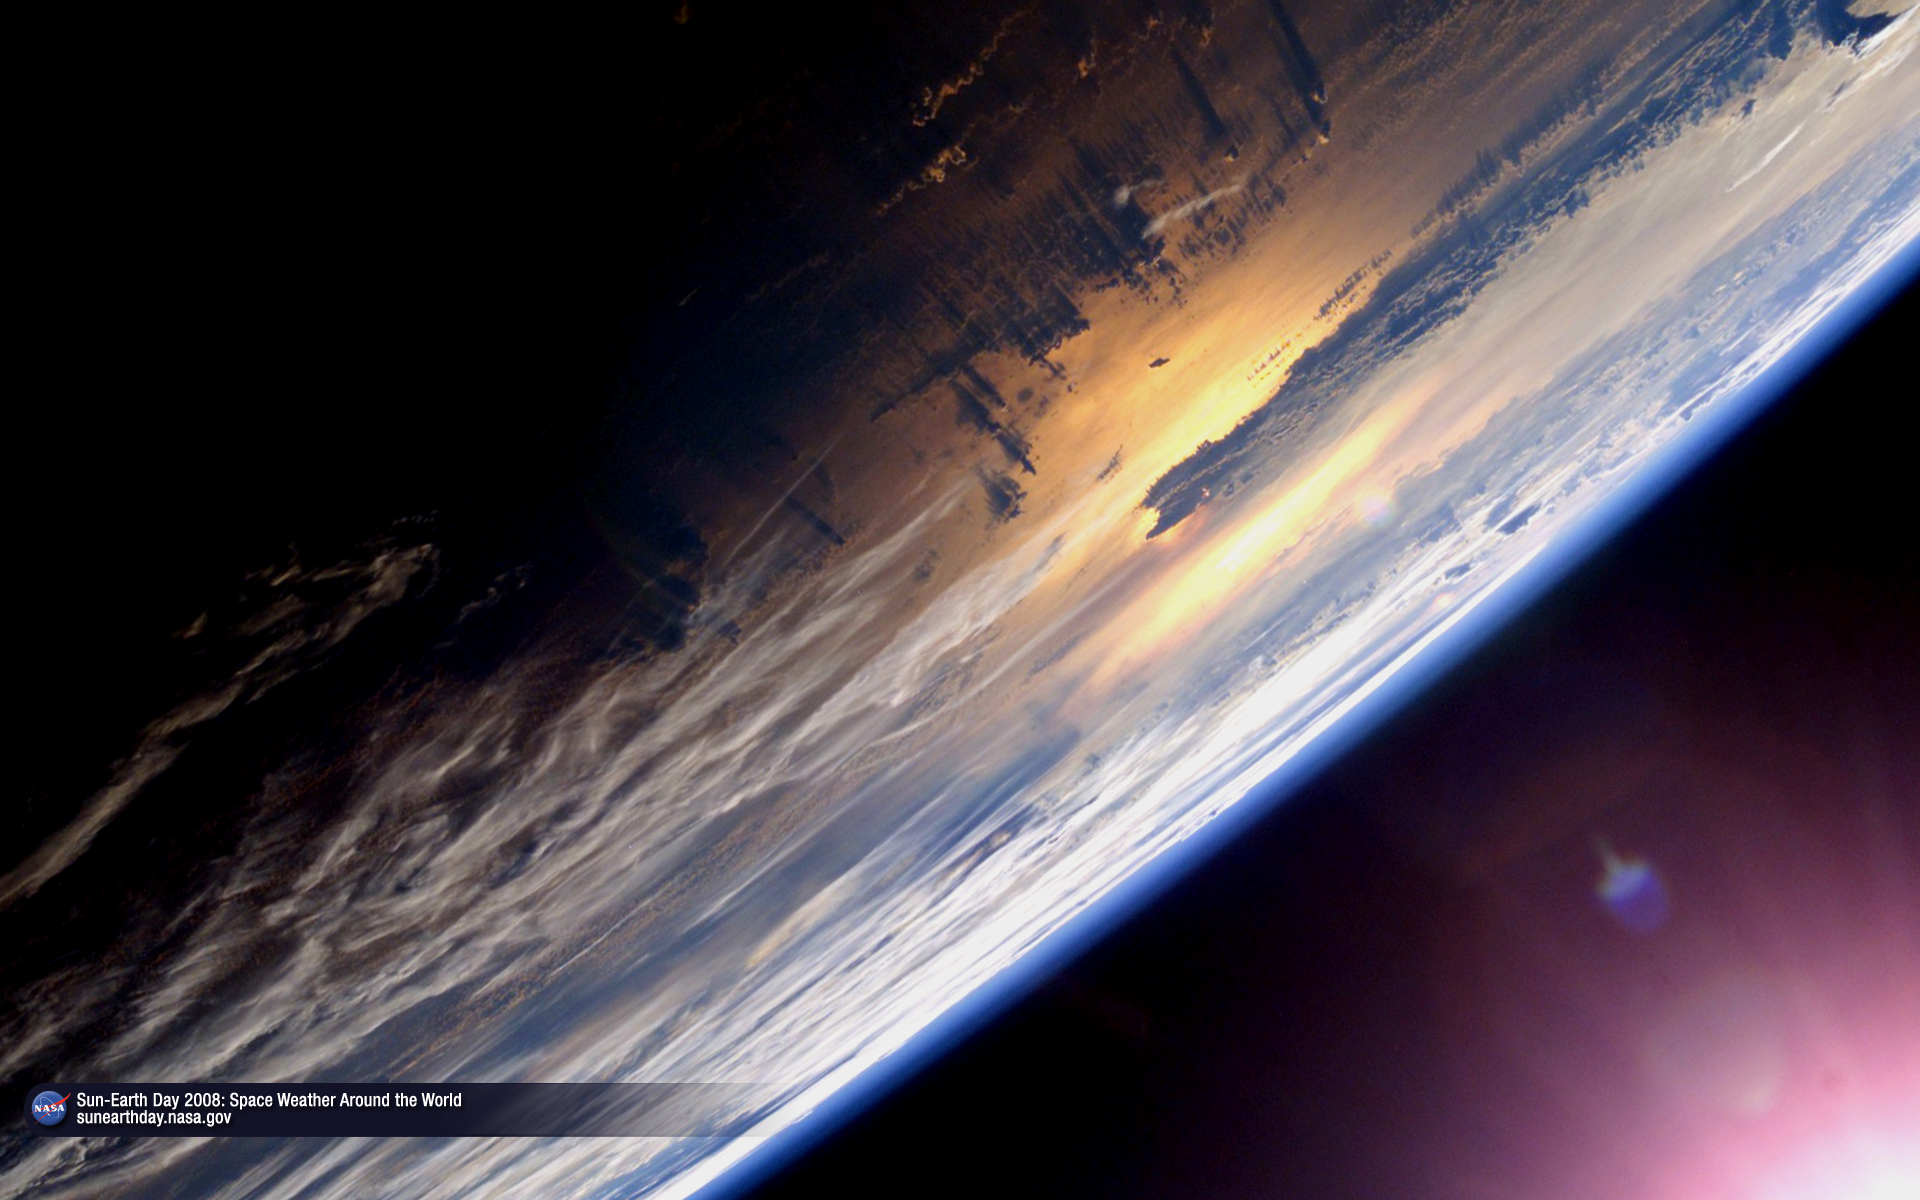 NASA - Sun-Earth Day - Space Weather Around the World